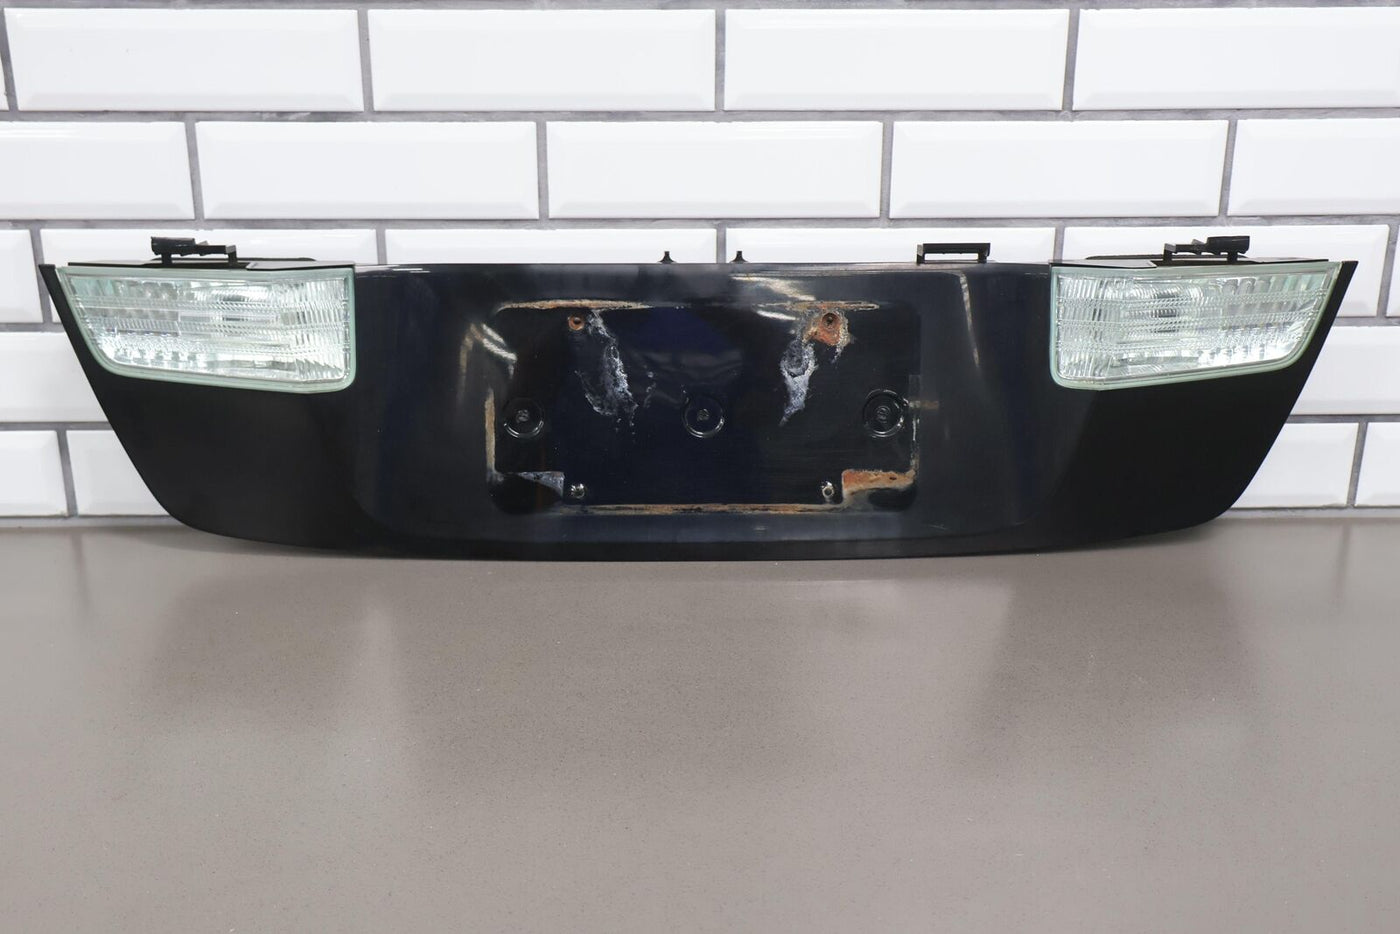 03-09 Lexus GX470 Rear Tail Finish Panel W/ Reverse Lights (Black Onyx 202)